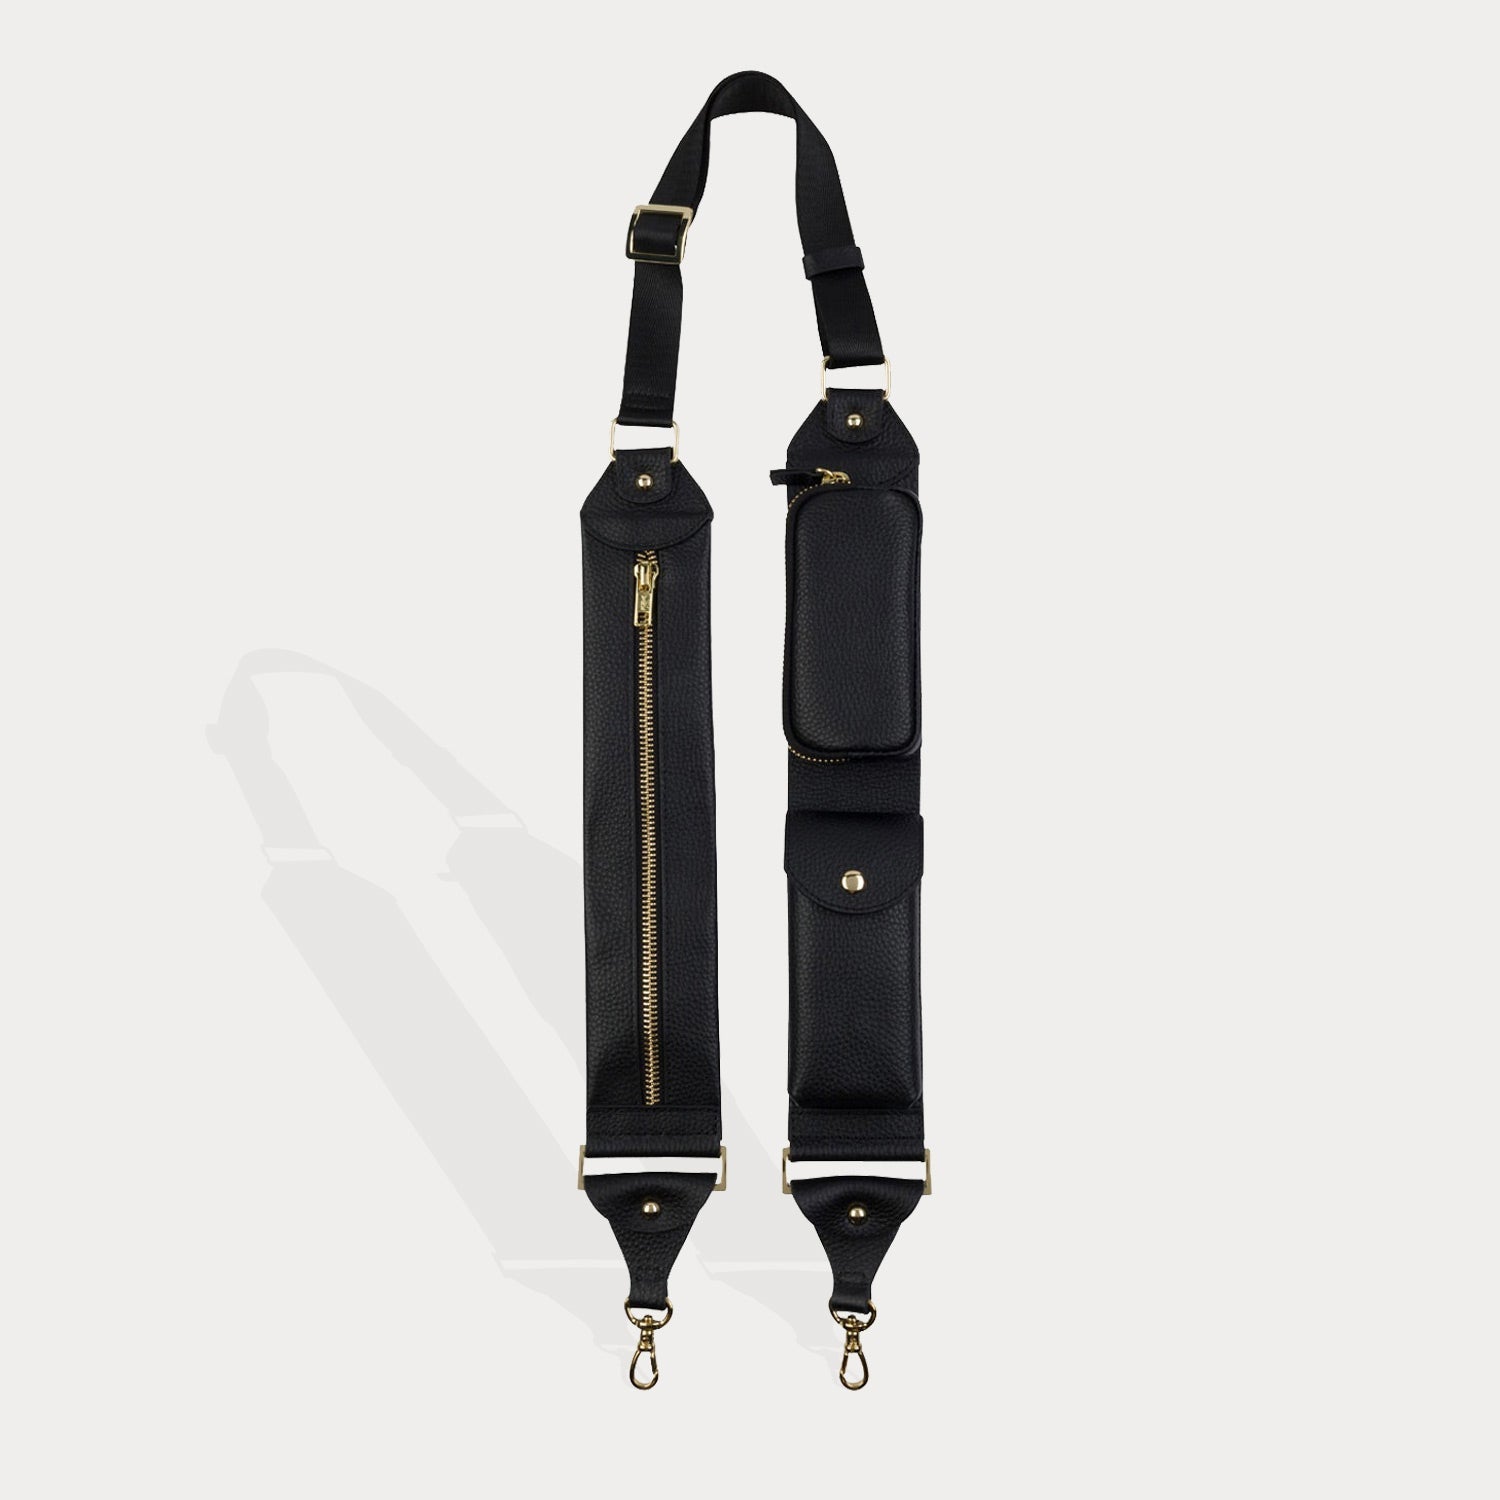 Bobby Nylon Adjustable Crossbody Strap in Black/Gold | Genuine Leather | Bandolier Style